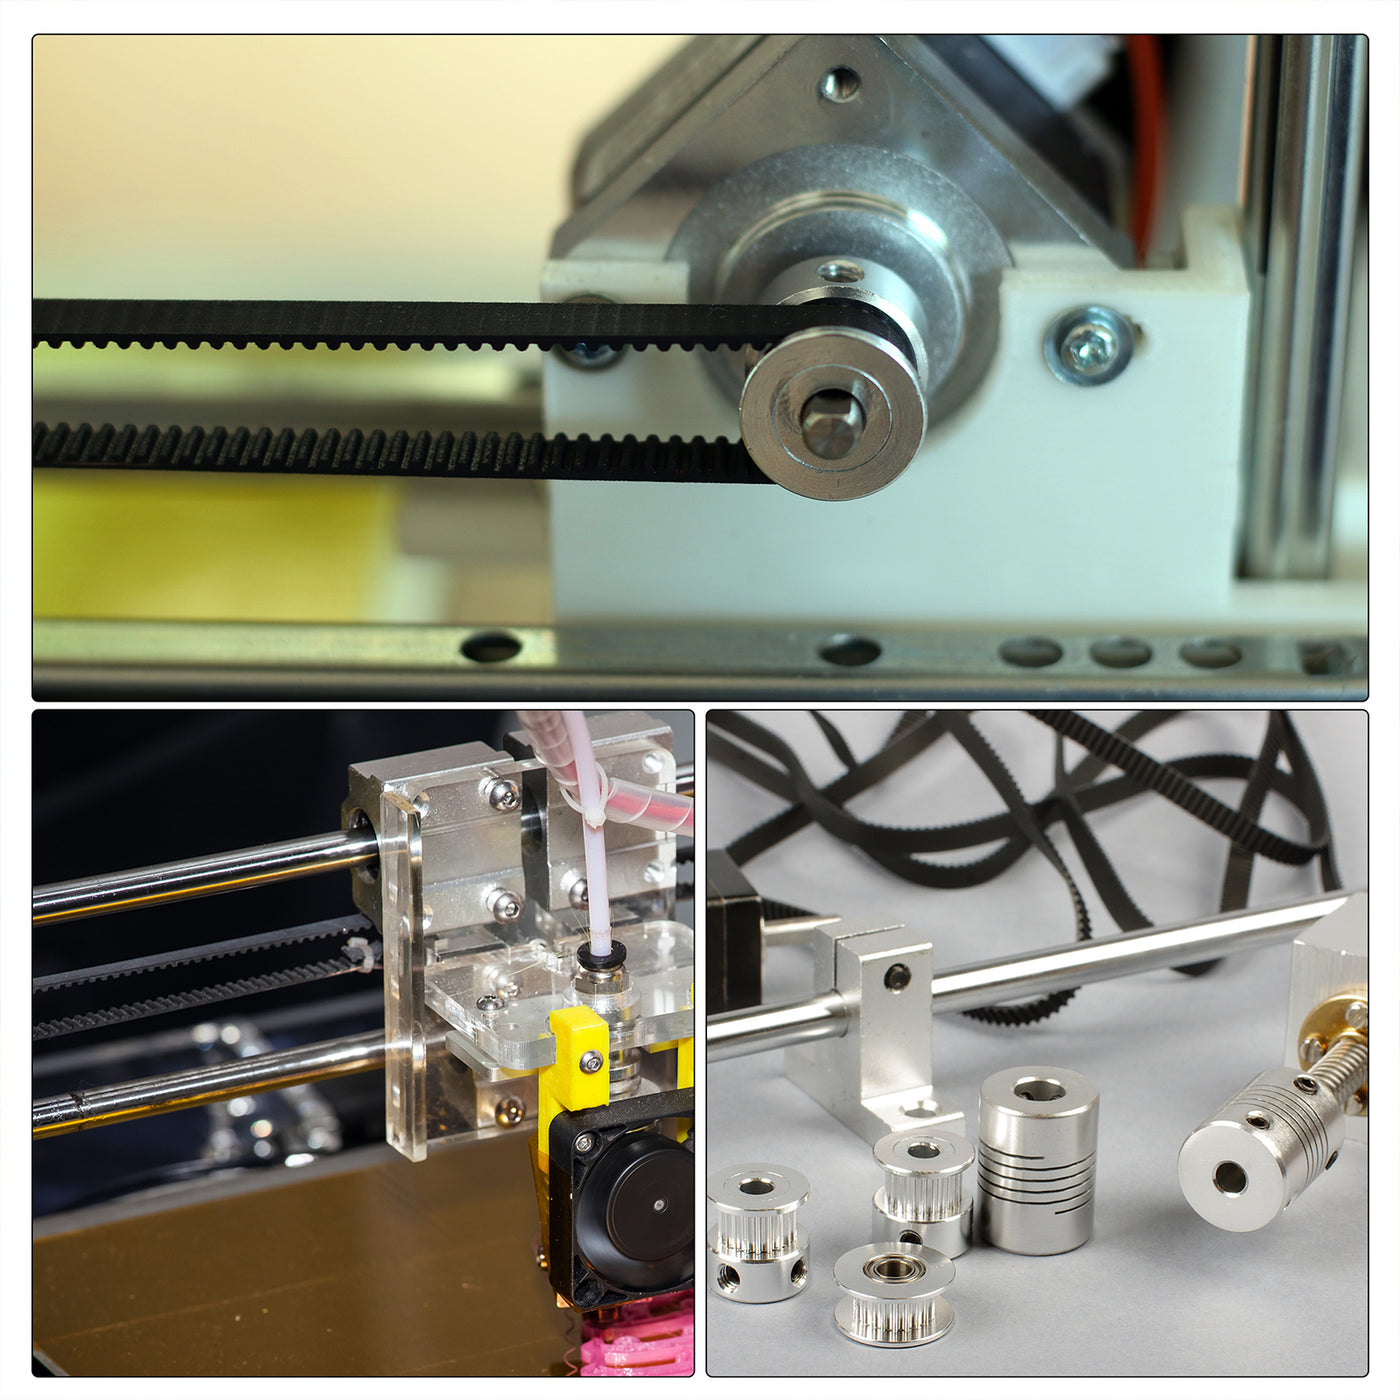 Harfington Timing Pulley, Aluminium Synchronous Wheels, for 3D Printer Belt, CNC